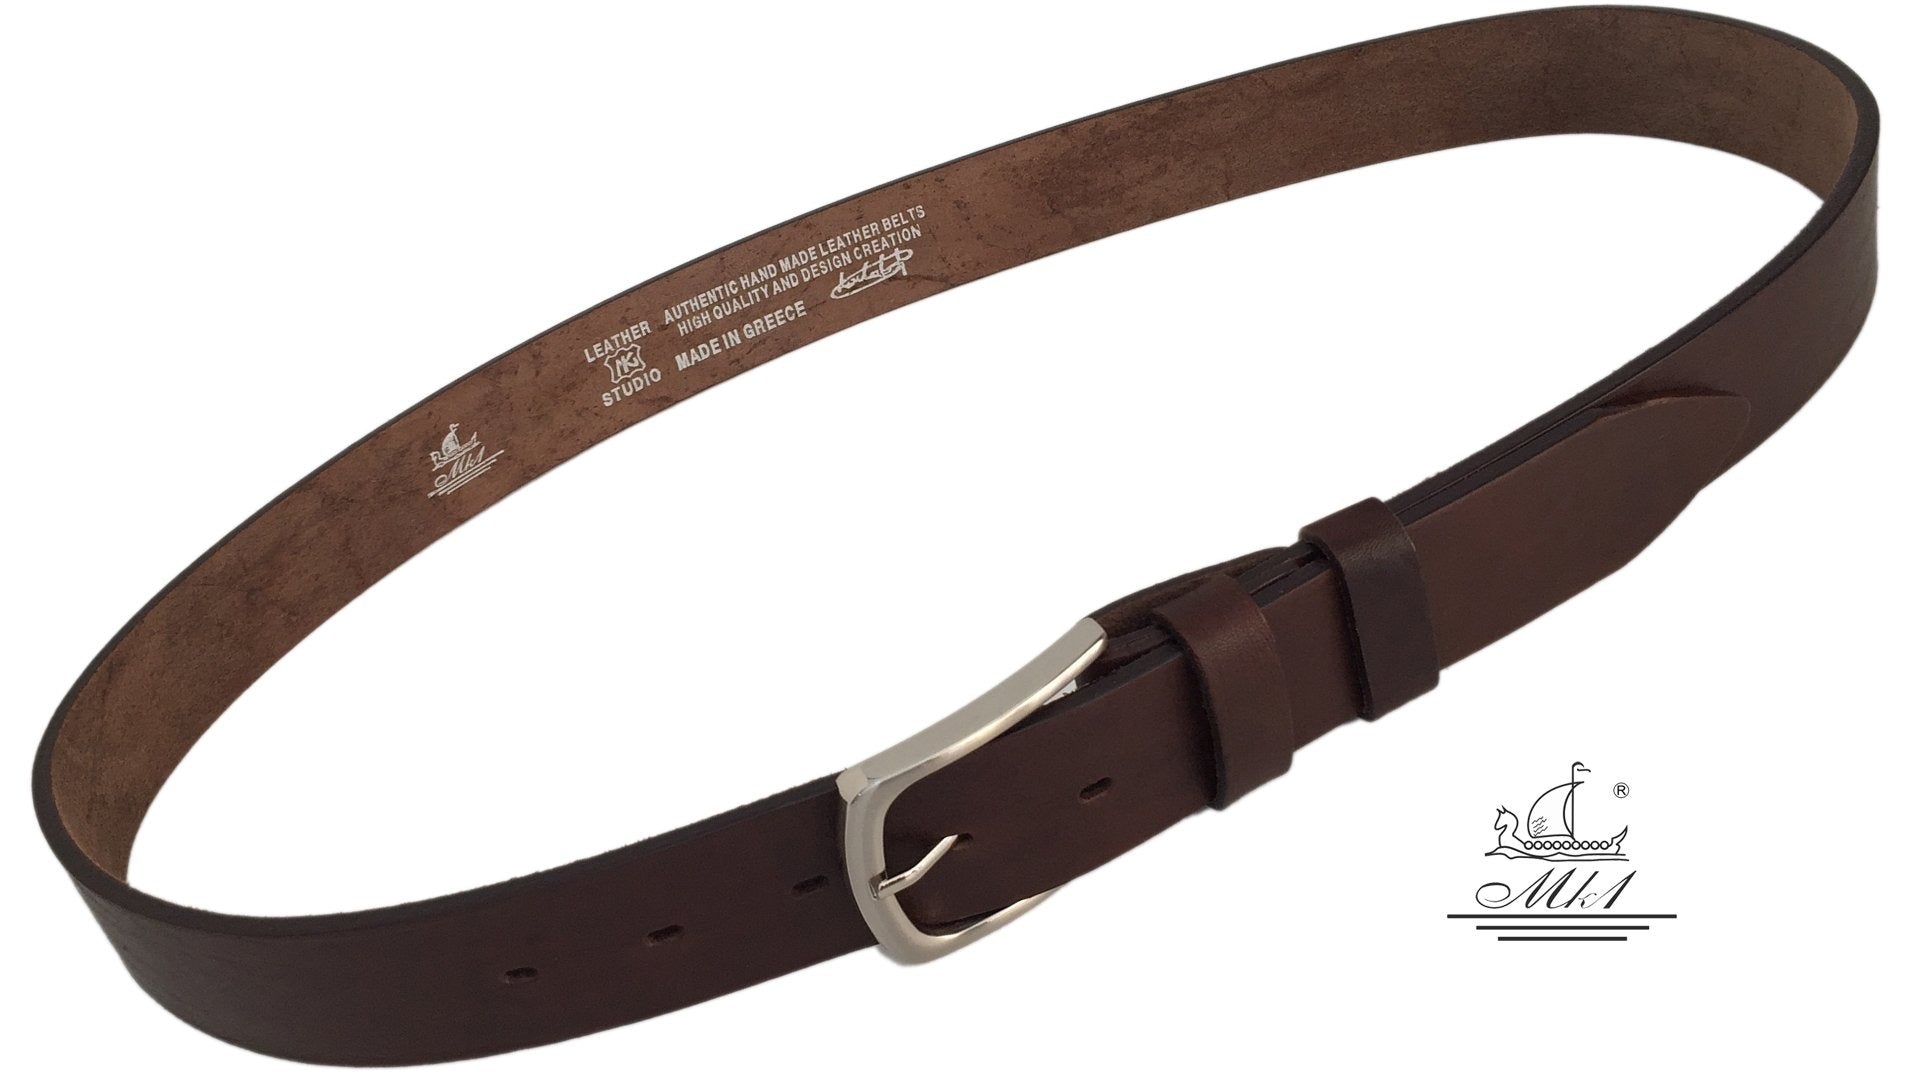 Hand made leather belt. n2699/40k